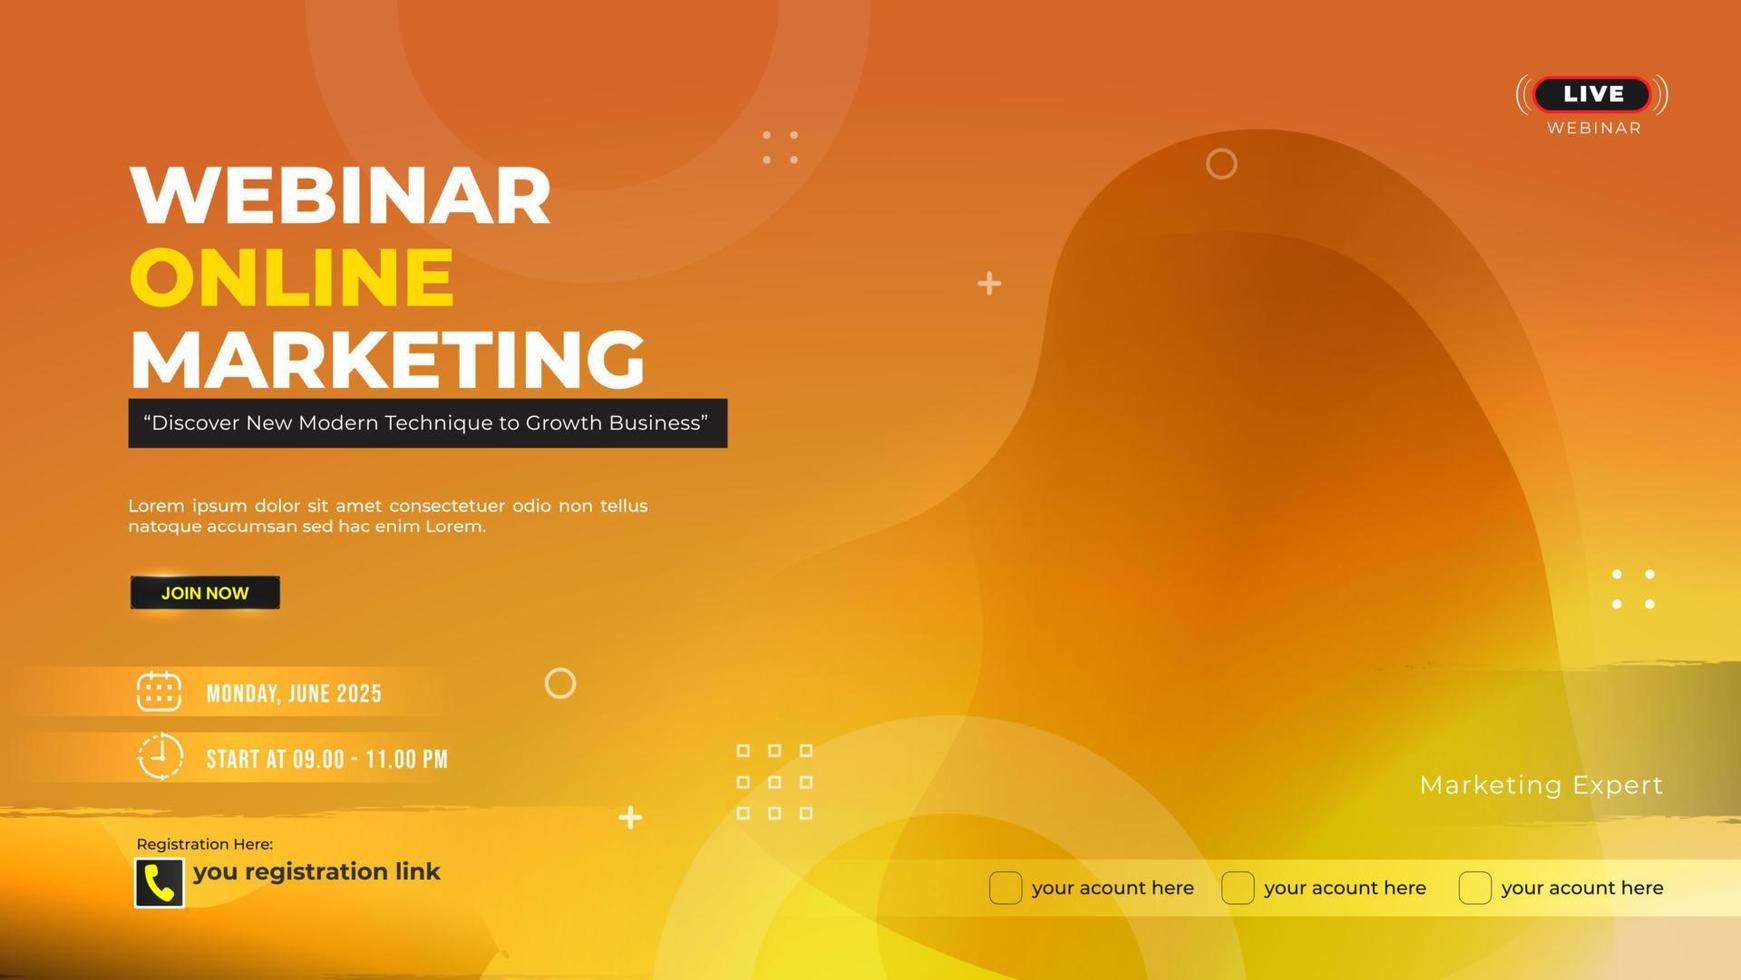 webinar online marketing banner template vector